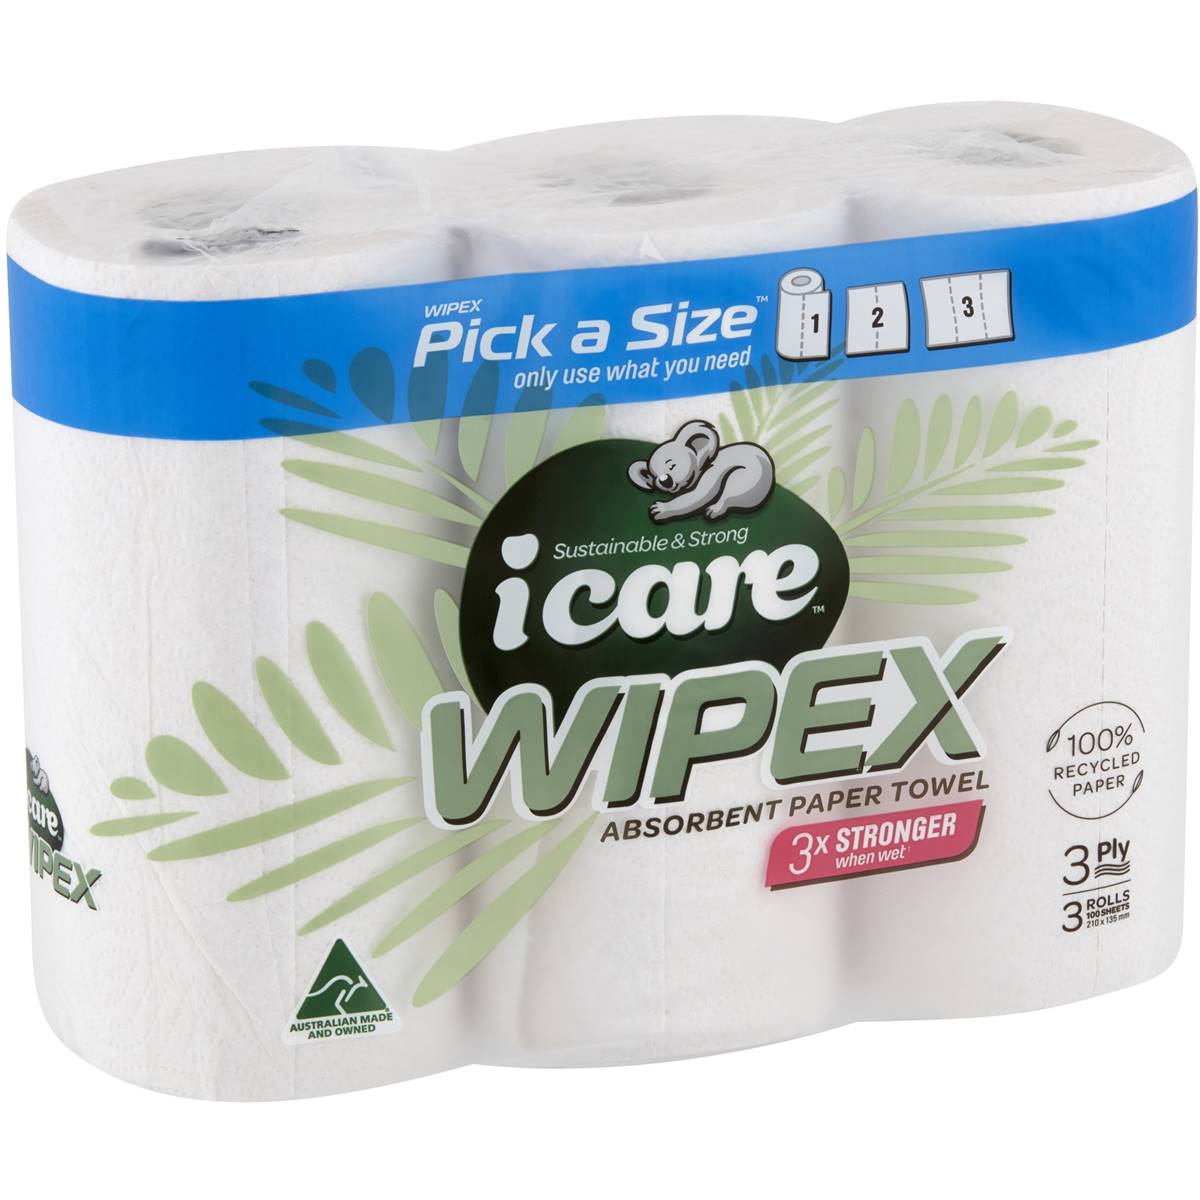 Icare Paper Towel Pick A Size 3pk